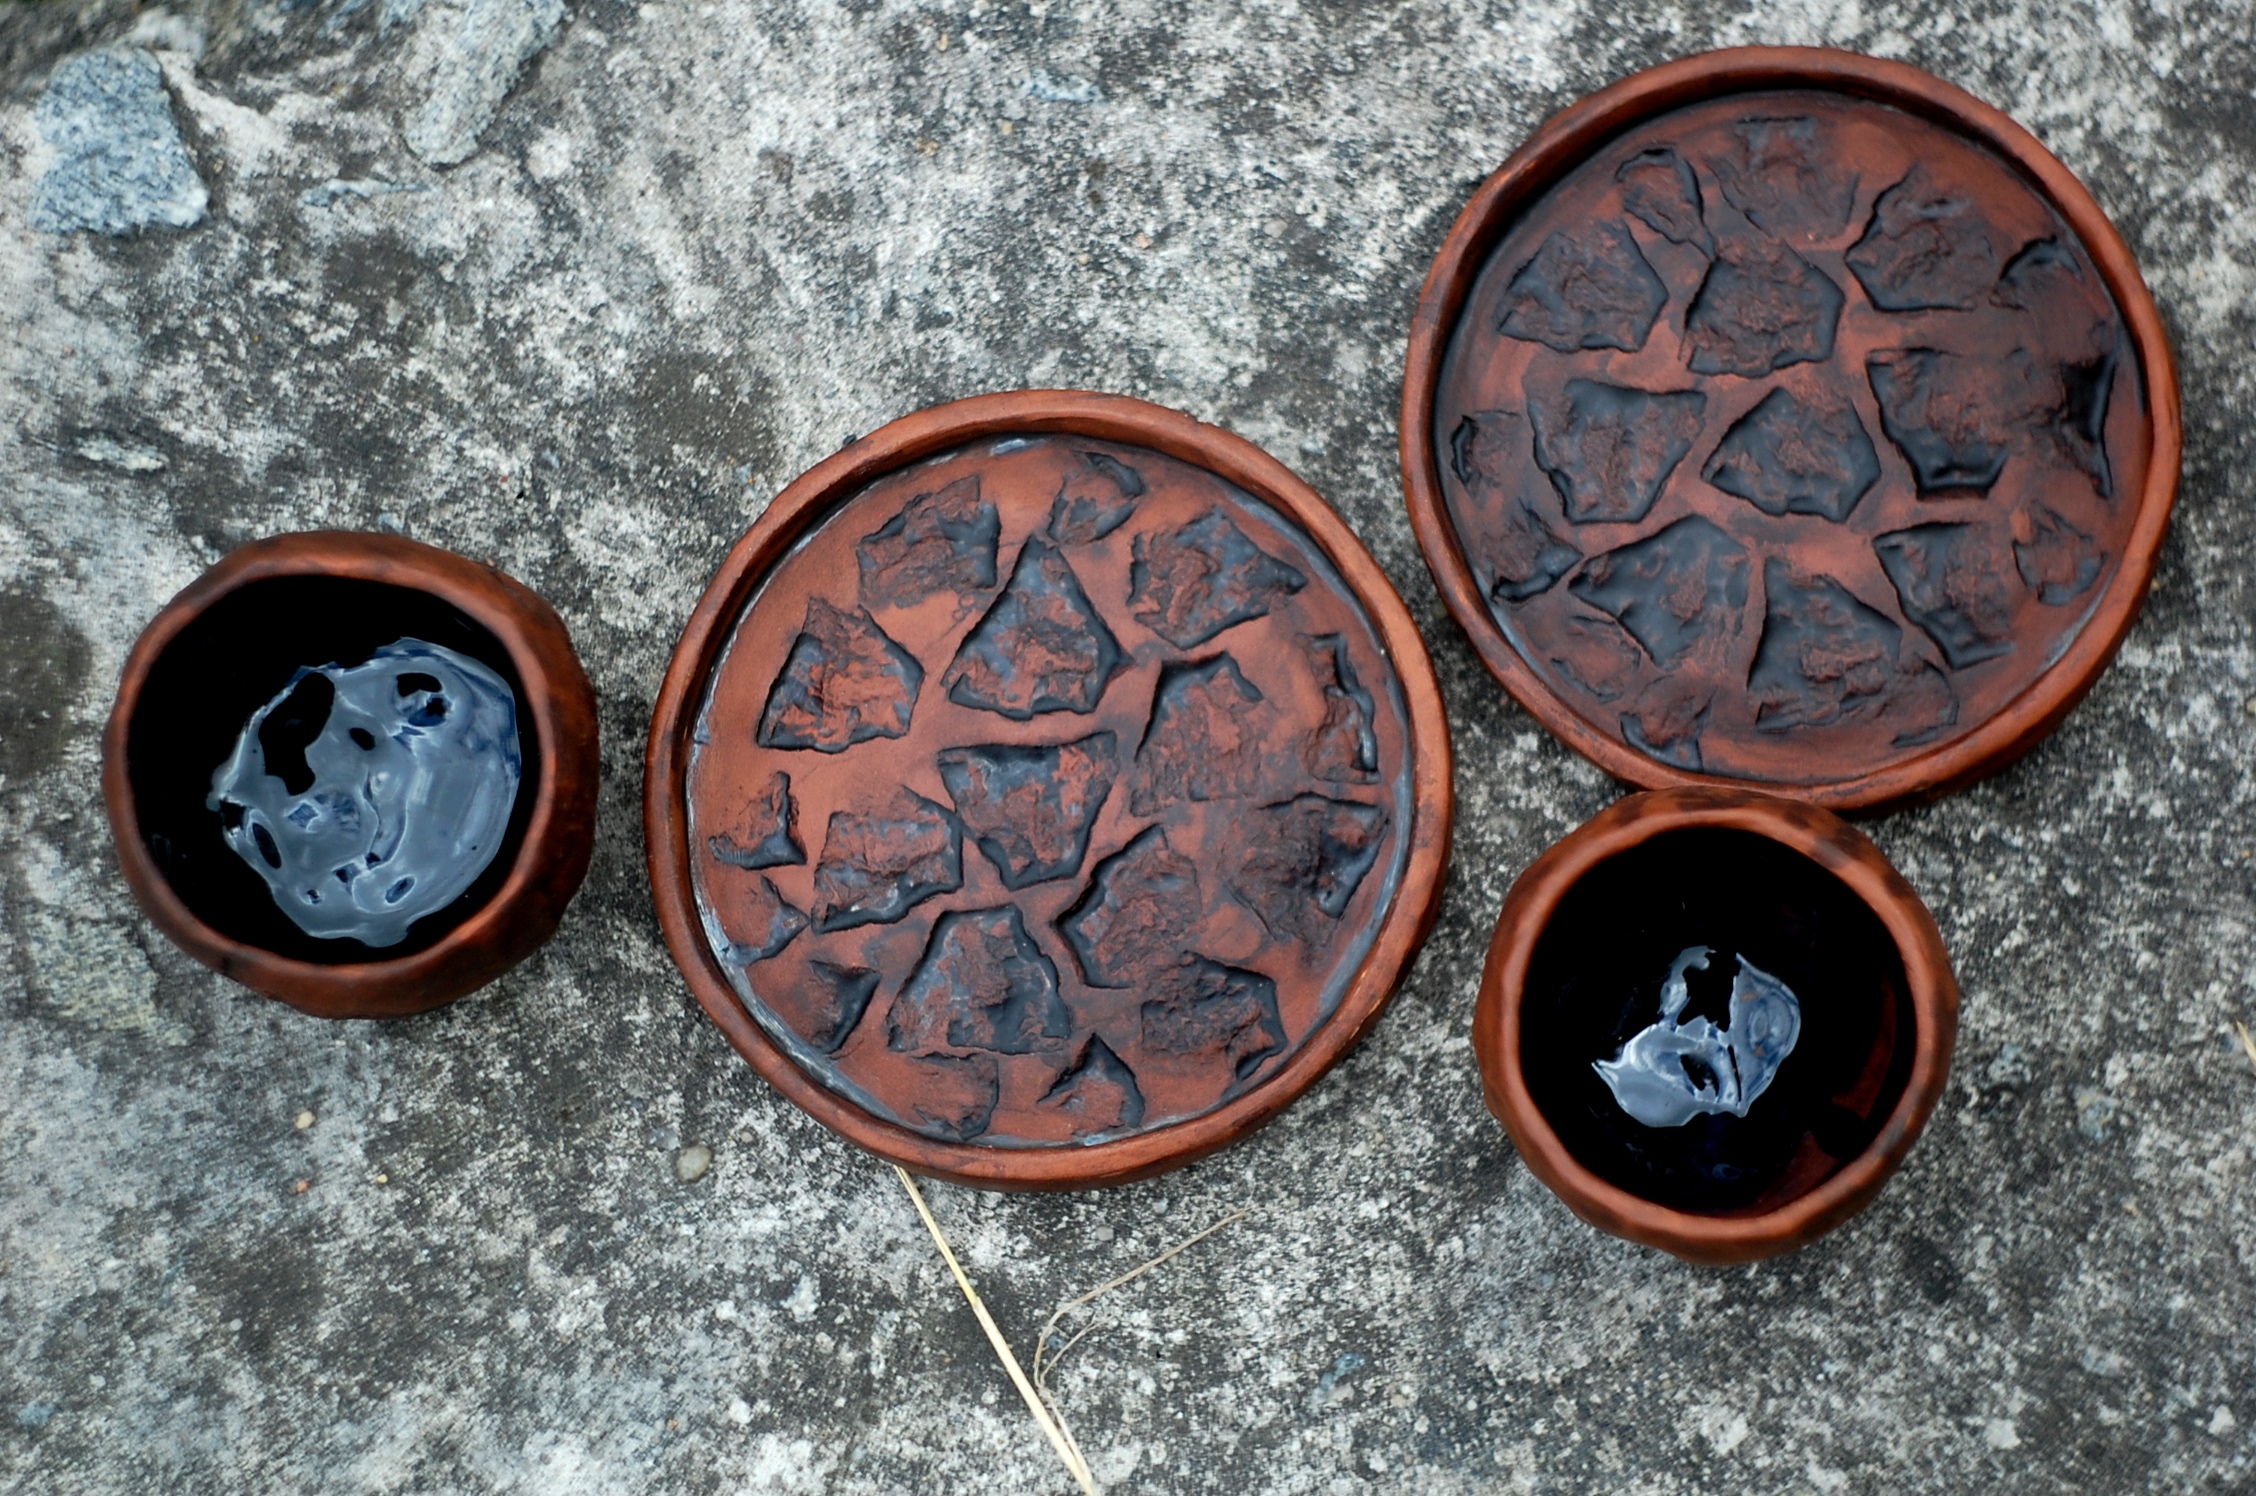 Handmade small stoneware mug "Stones" ~5oz